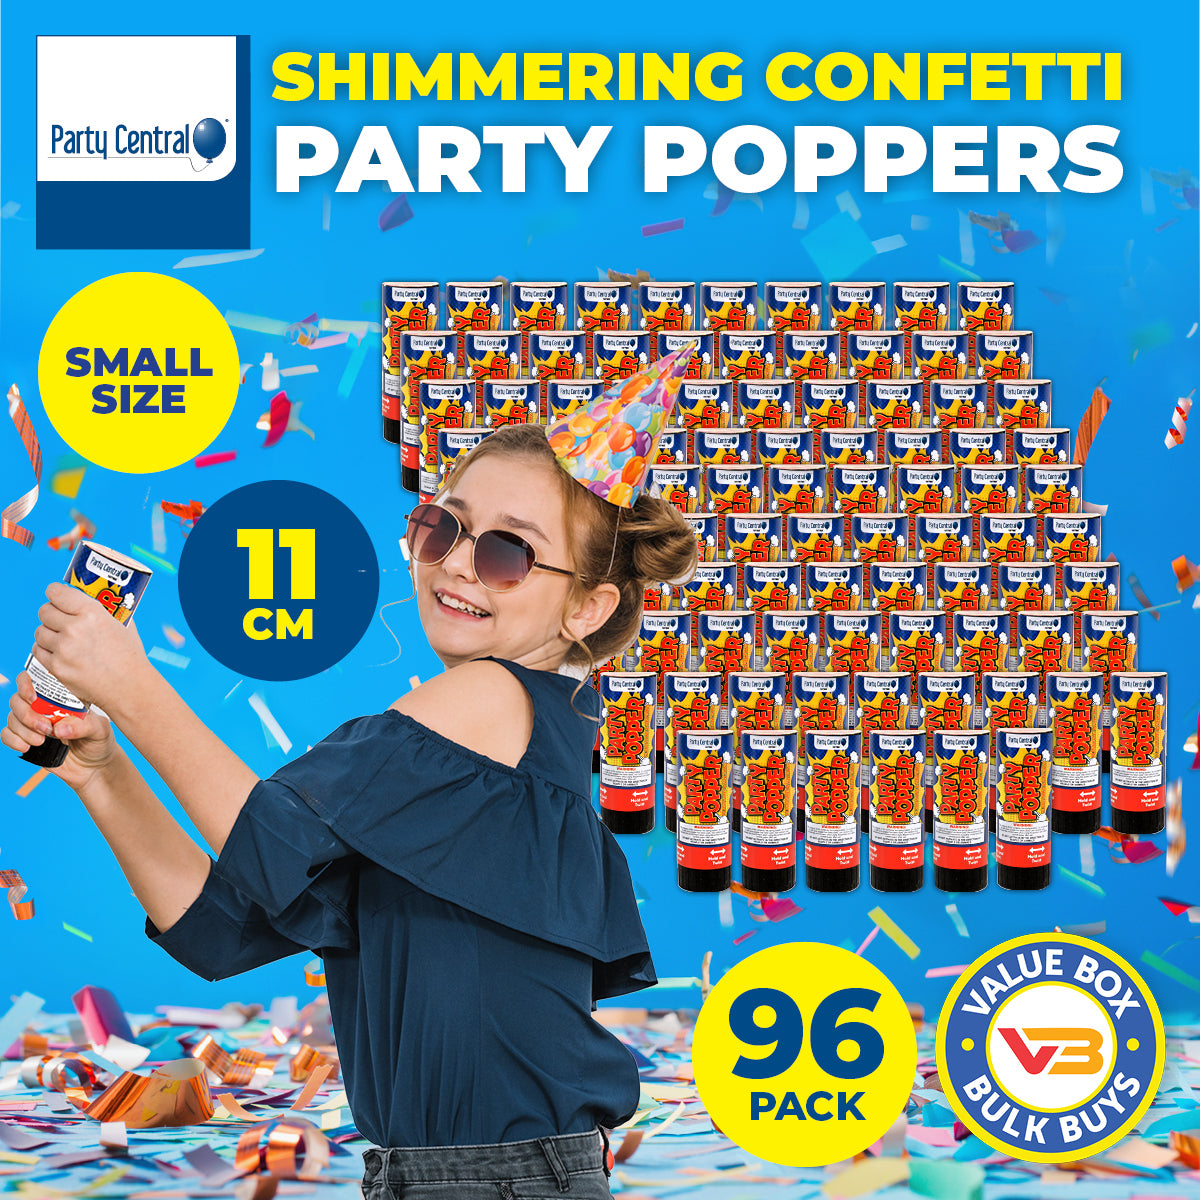 Party Central 96PCE Party Popper Twist Release Shimmering Confetti 11cm Deals499